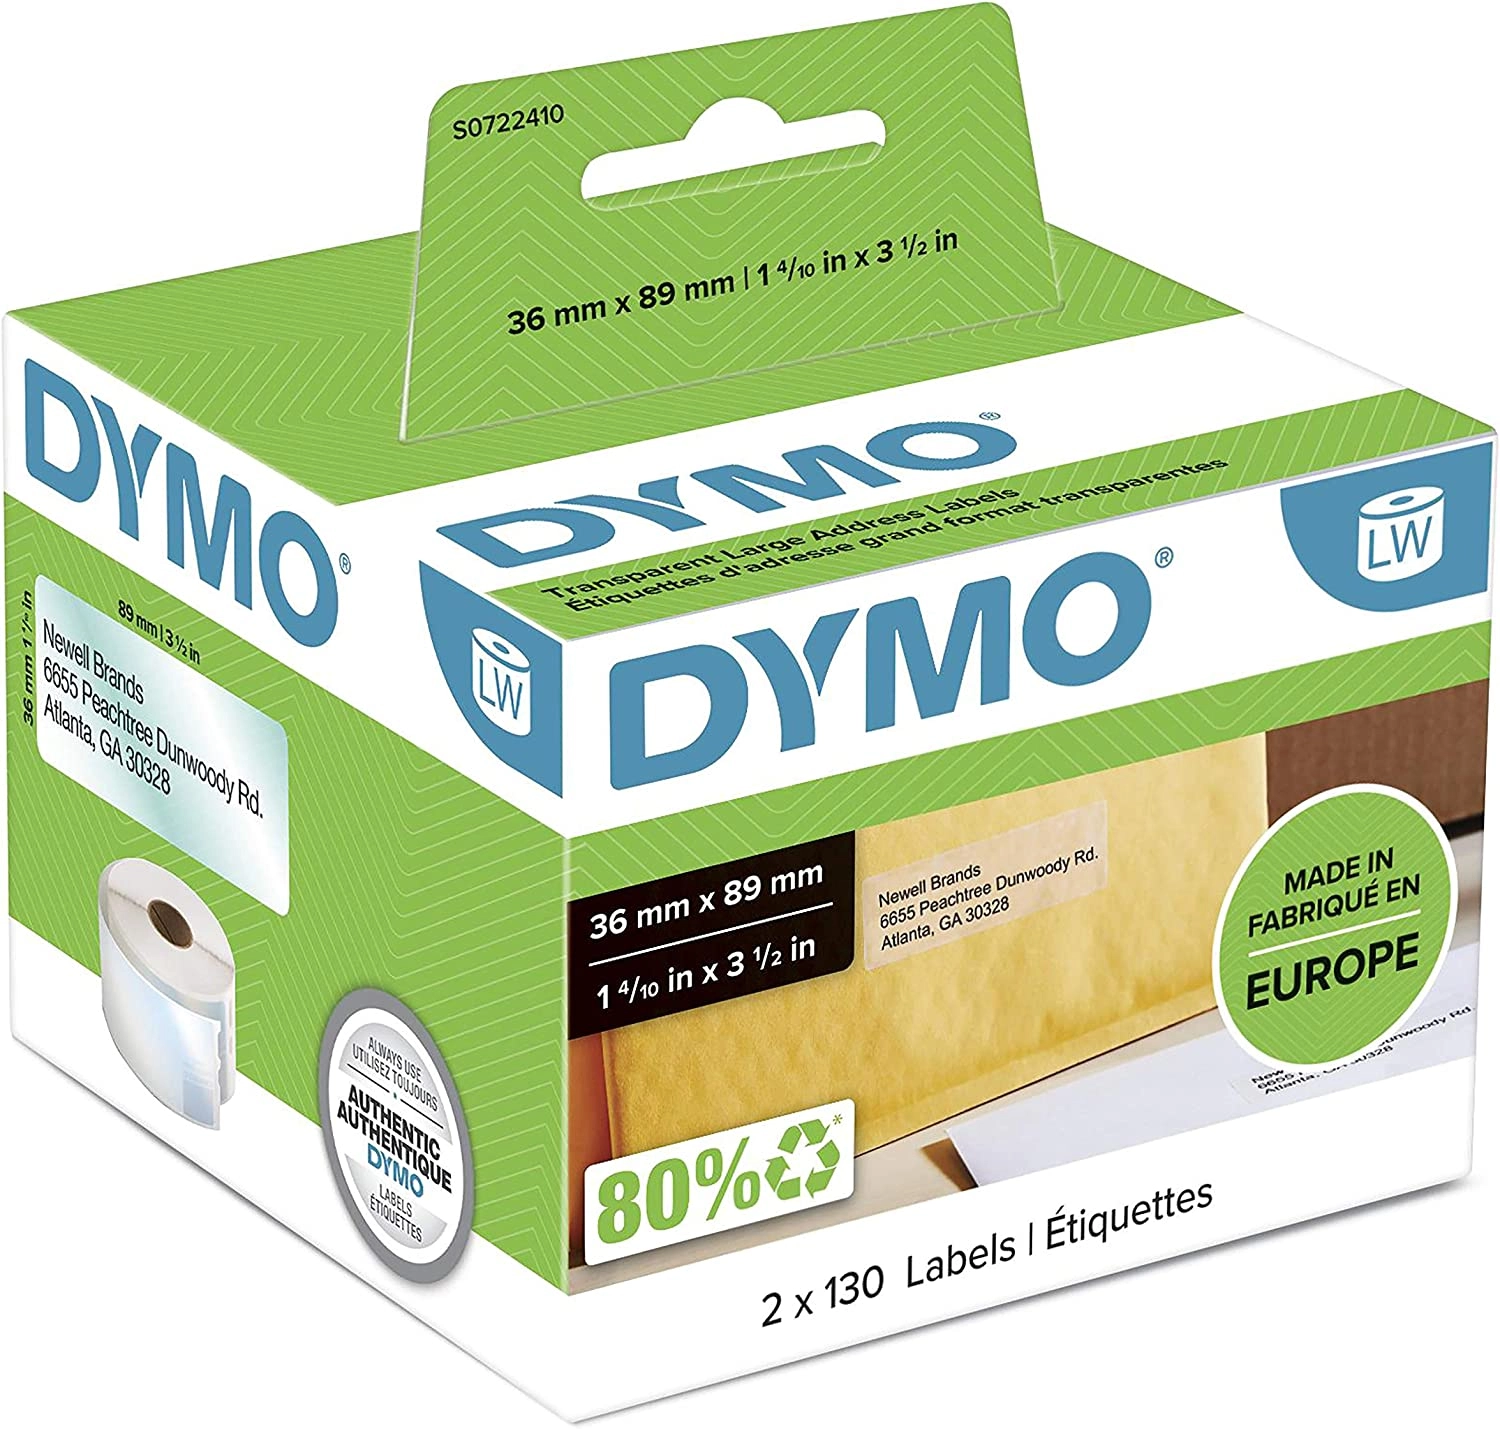 S0722410 Dymo LW 36mm x 89mm Transparent Plastic Roll